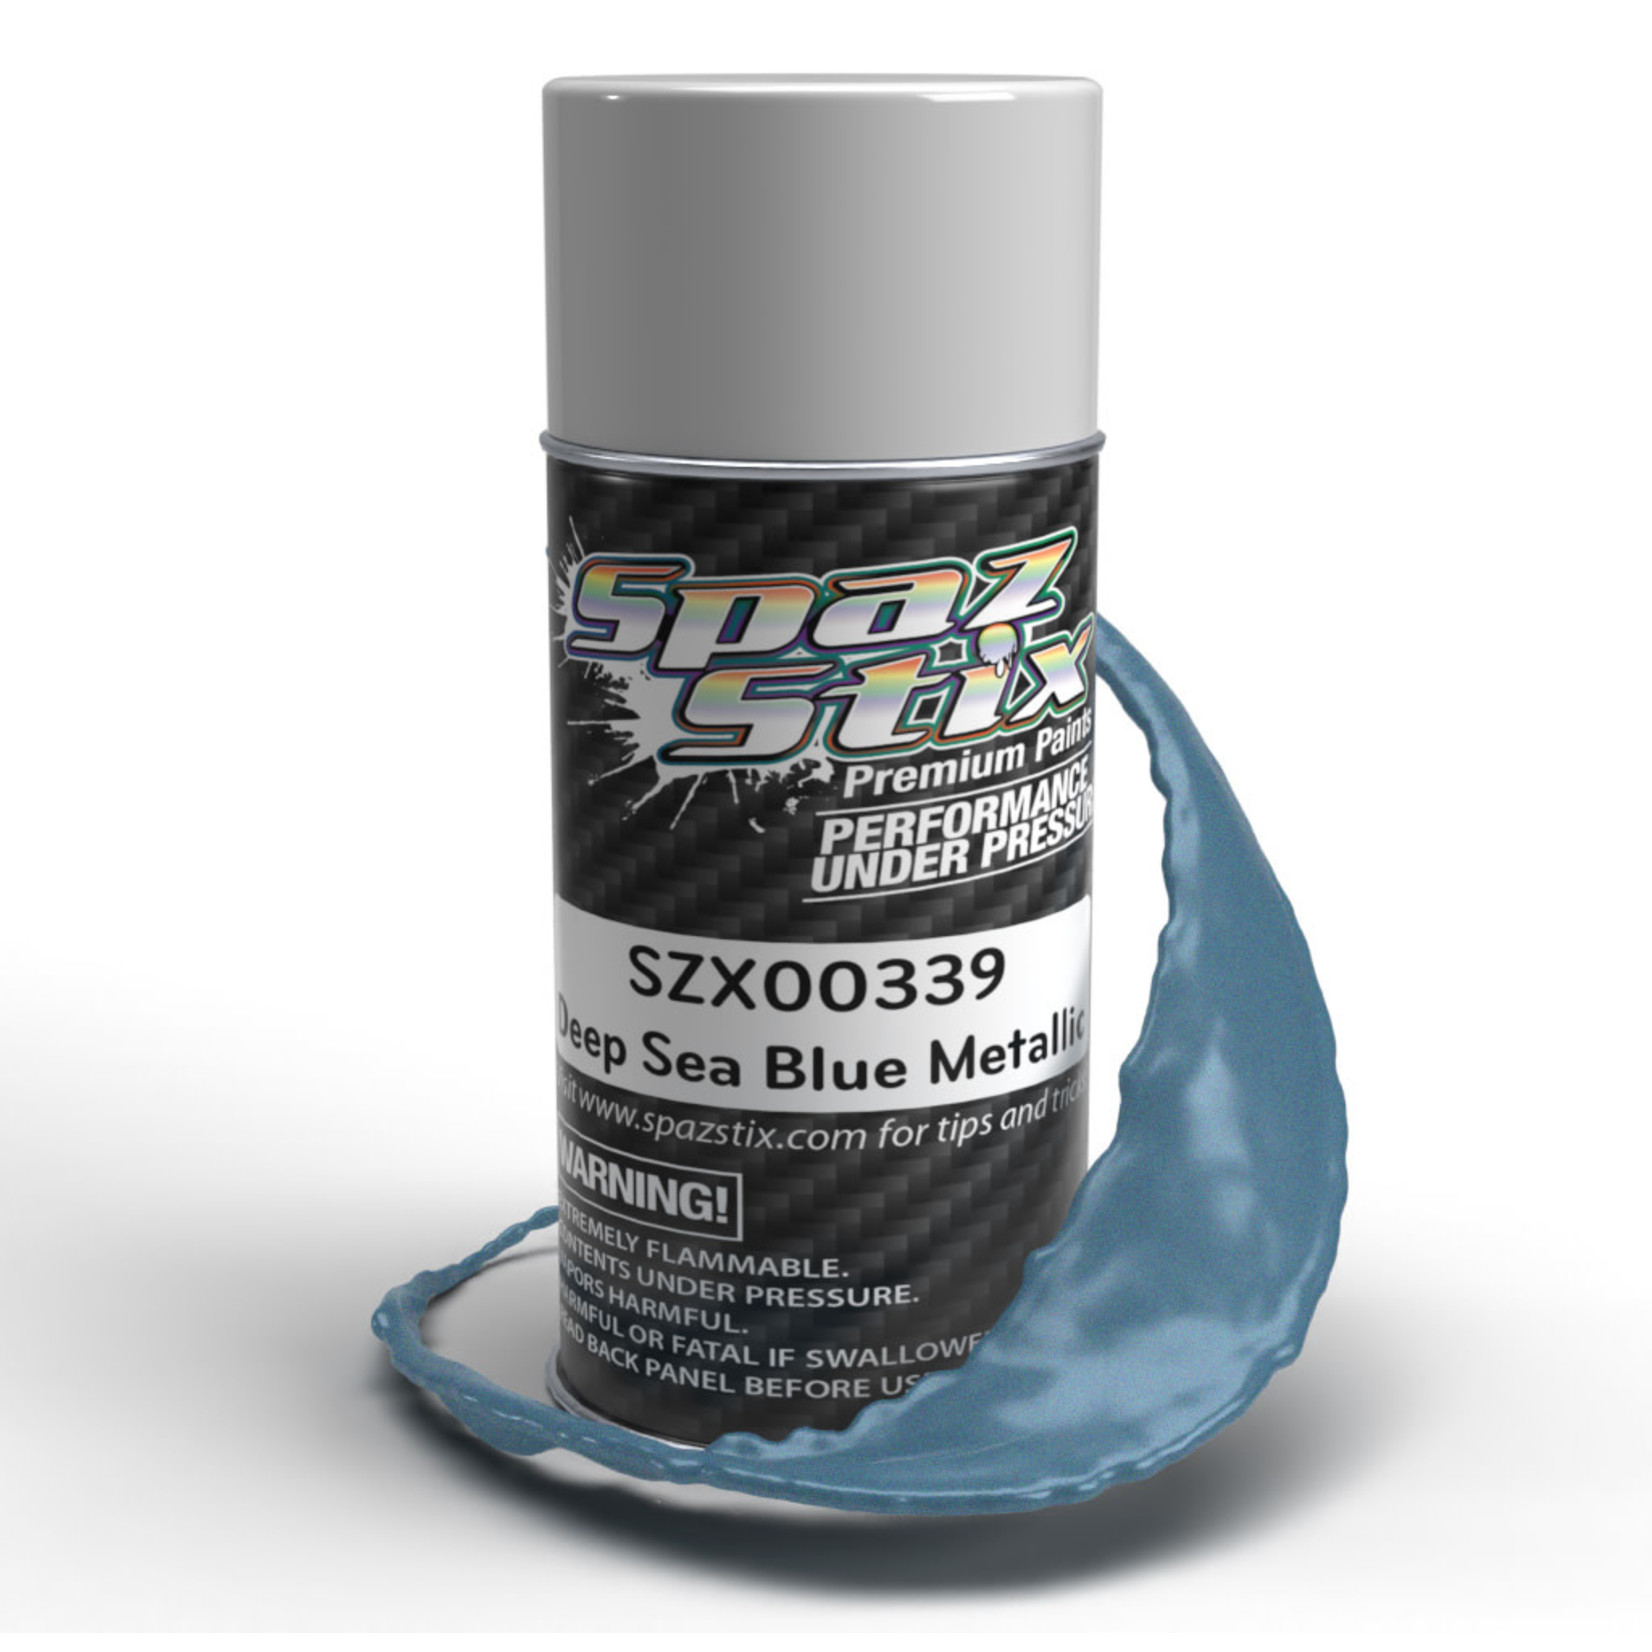 Spaz Stix Spaz Stix "Deep Sea Blue Metallic" Spray Paint (3.5oz) #00339